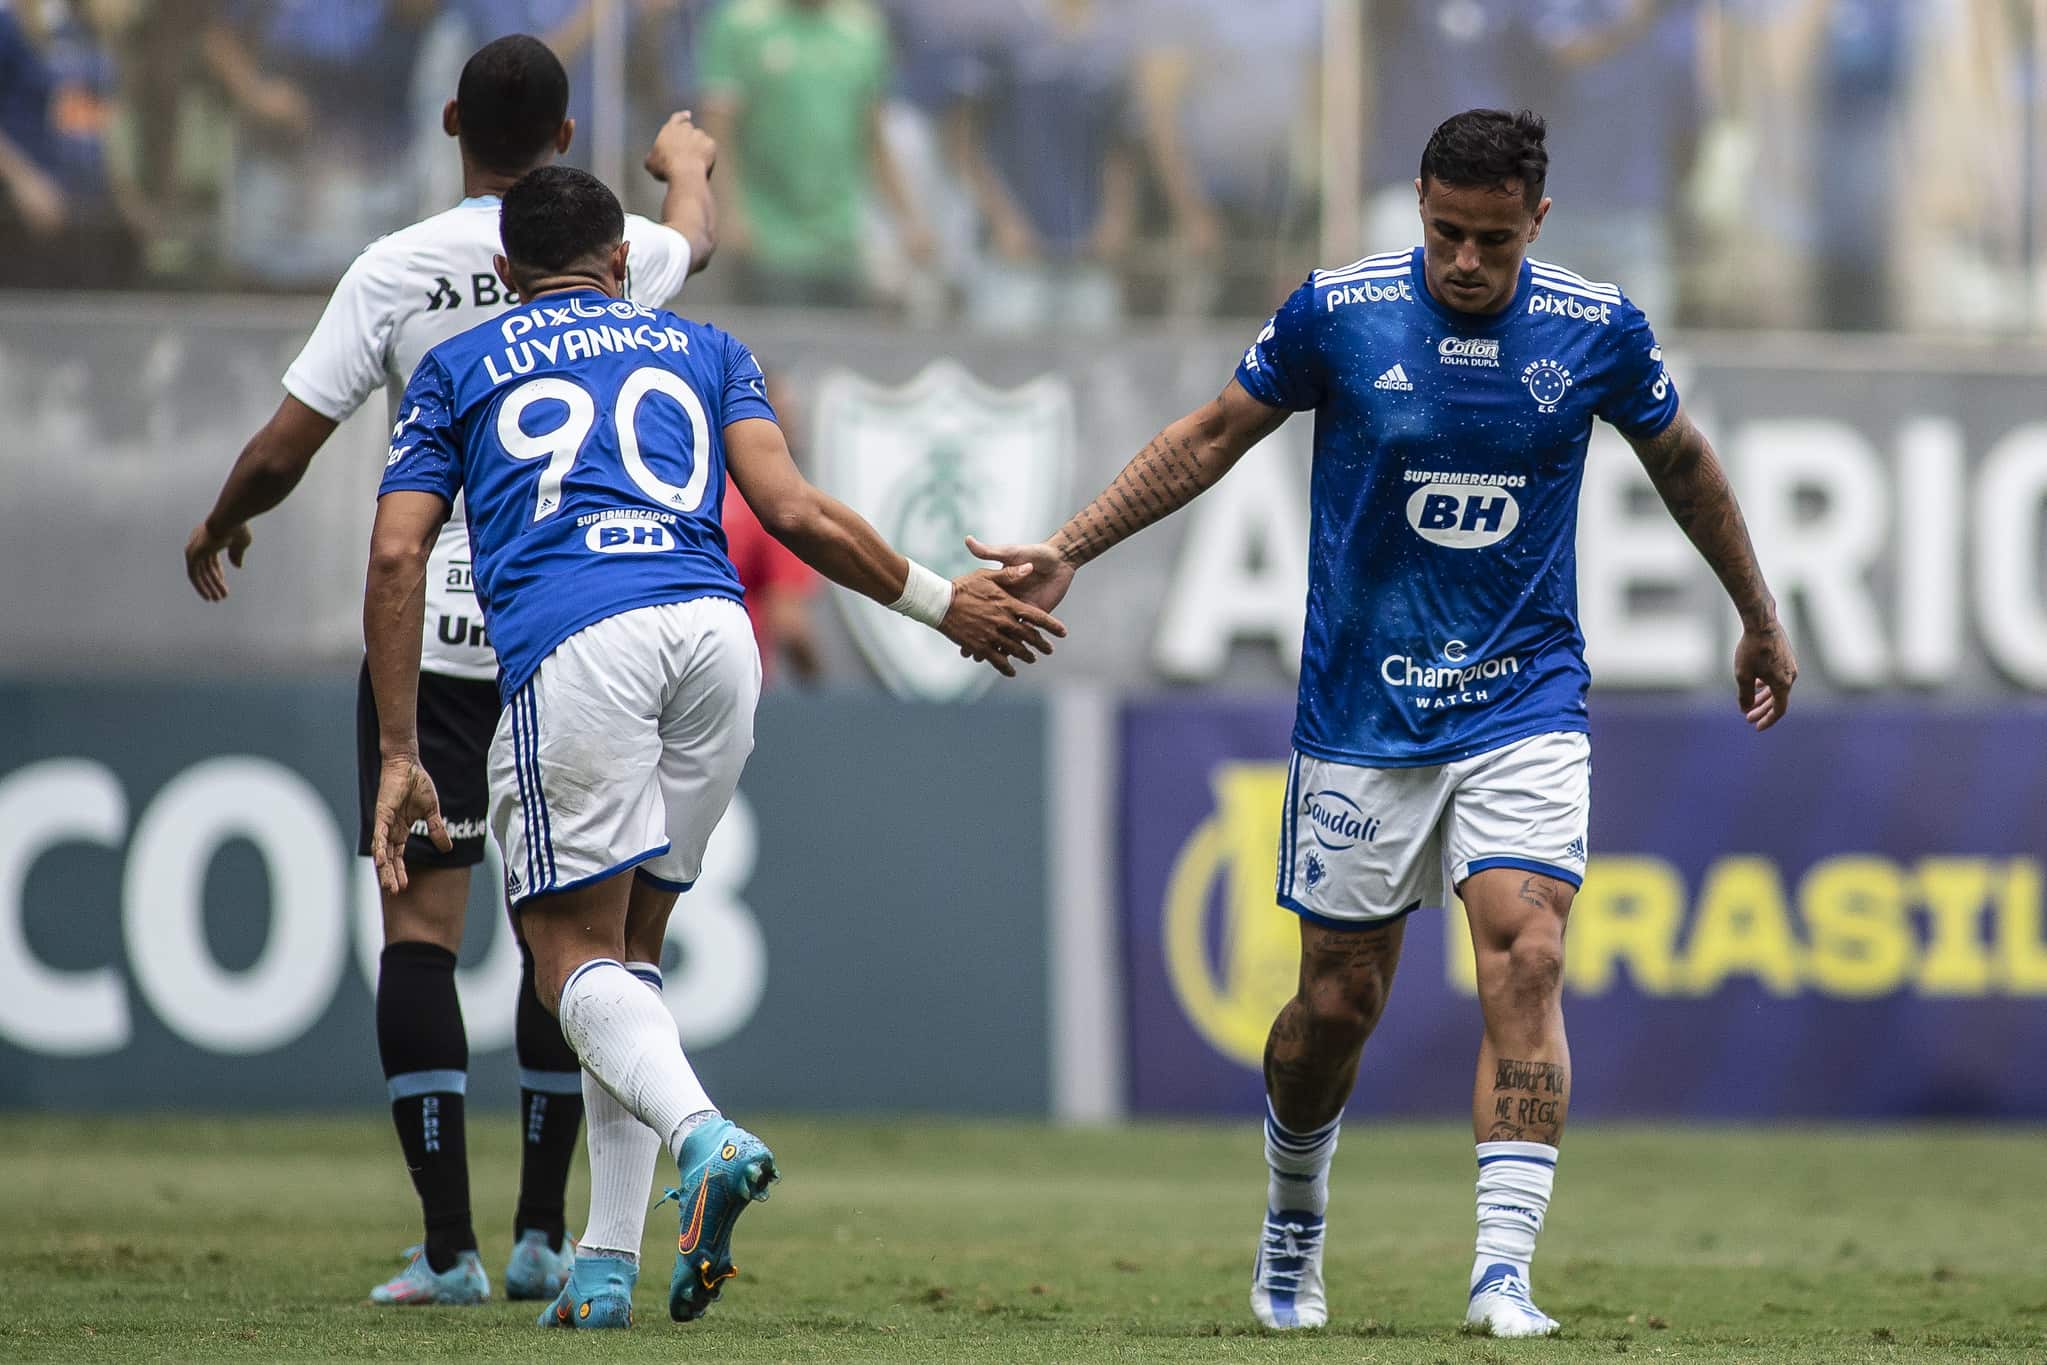 Palmeiras vs America MG: A Clash in the Copinha